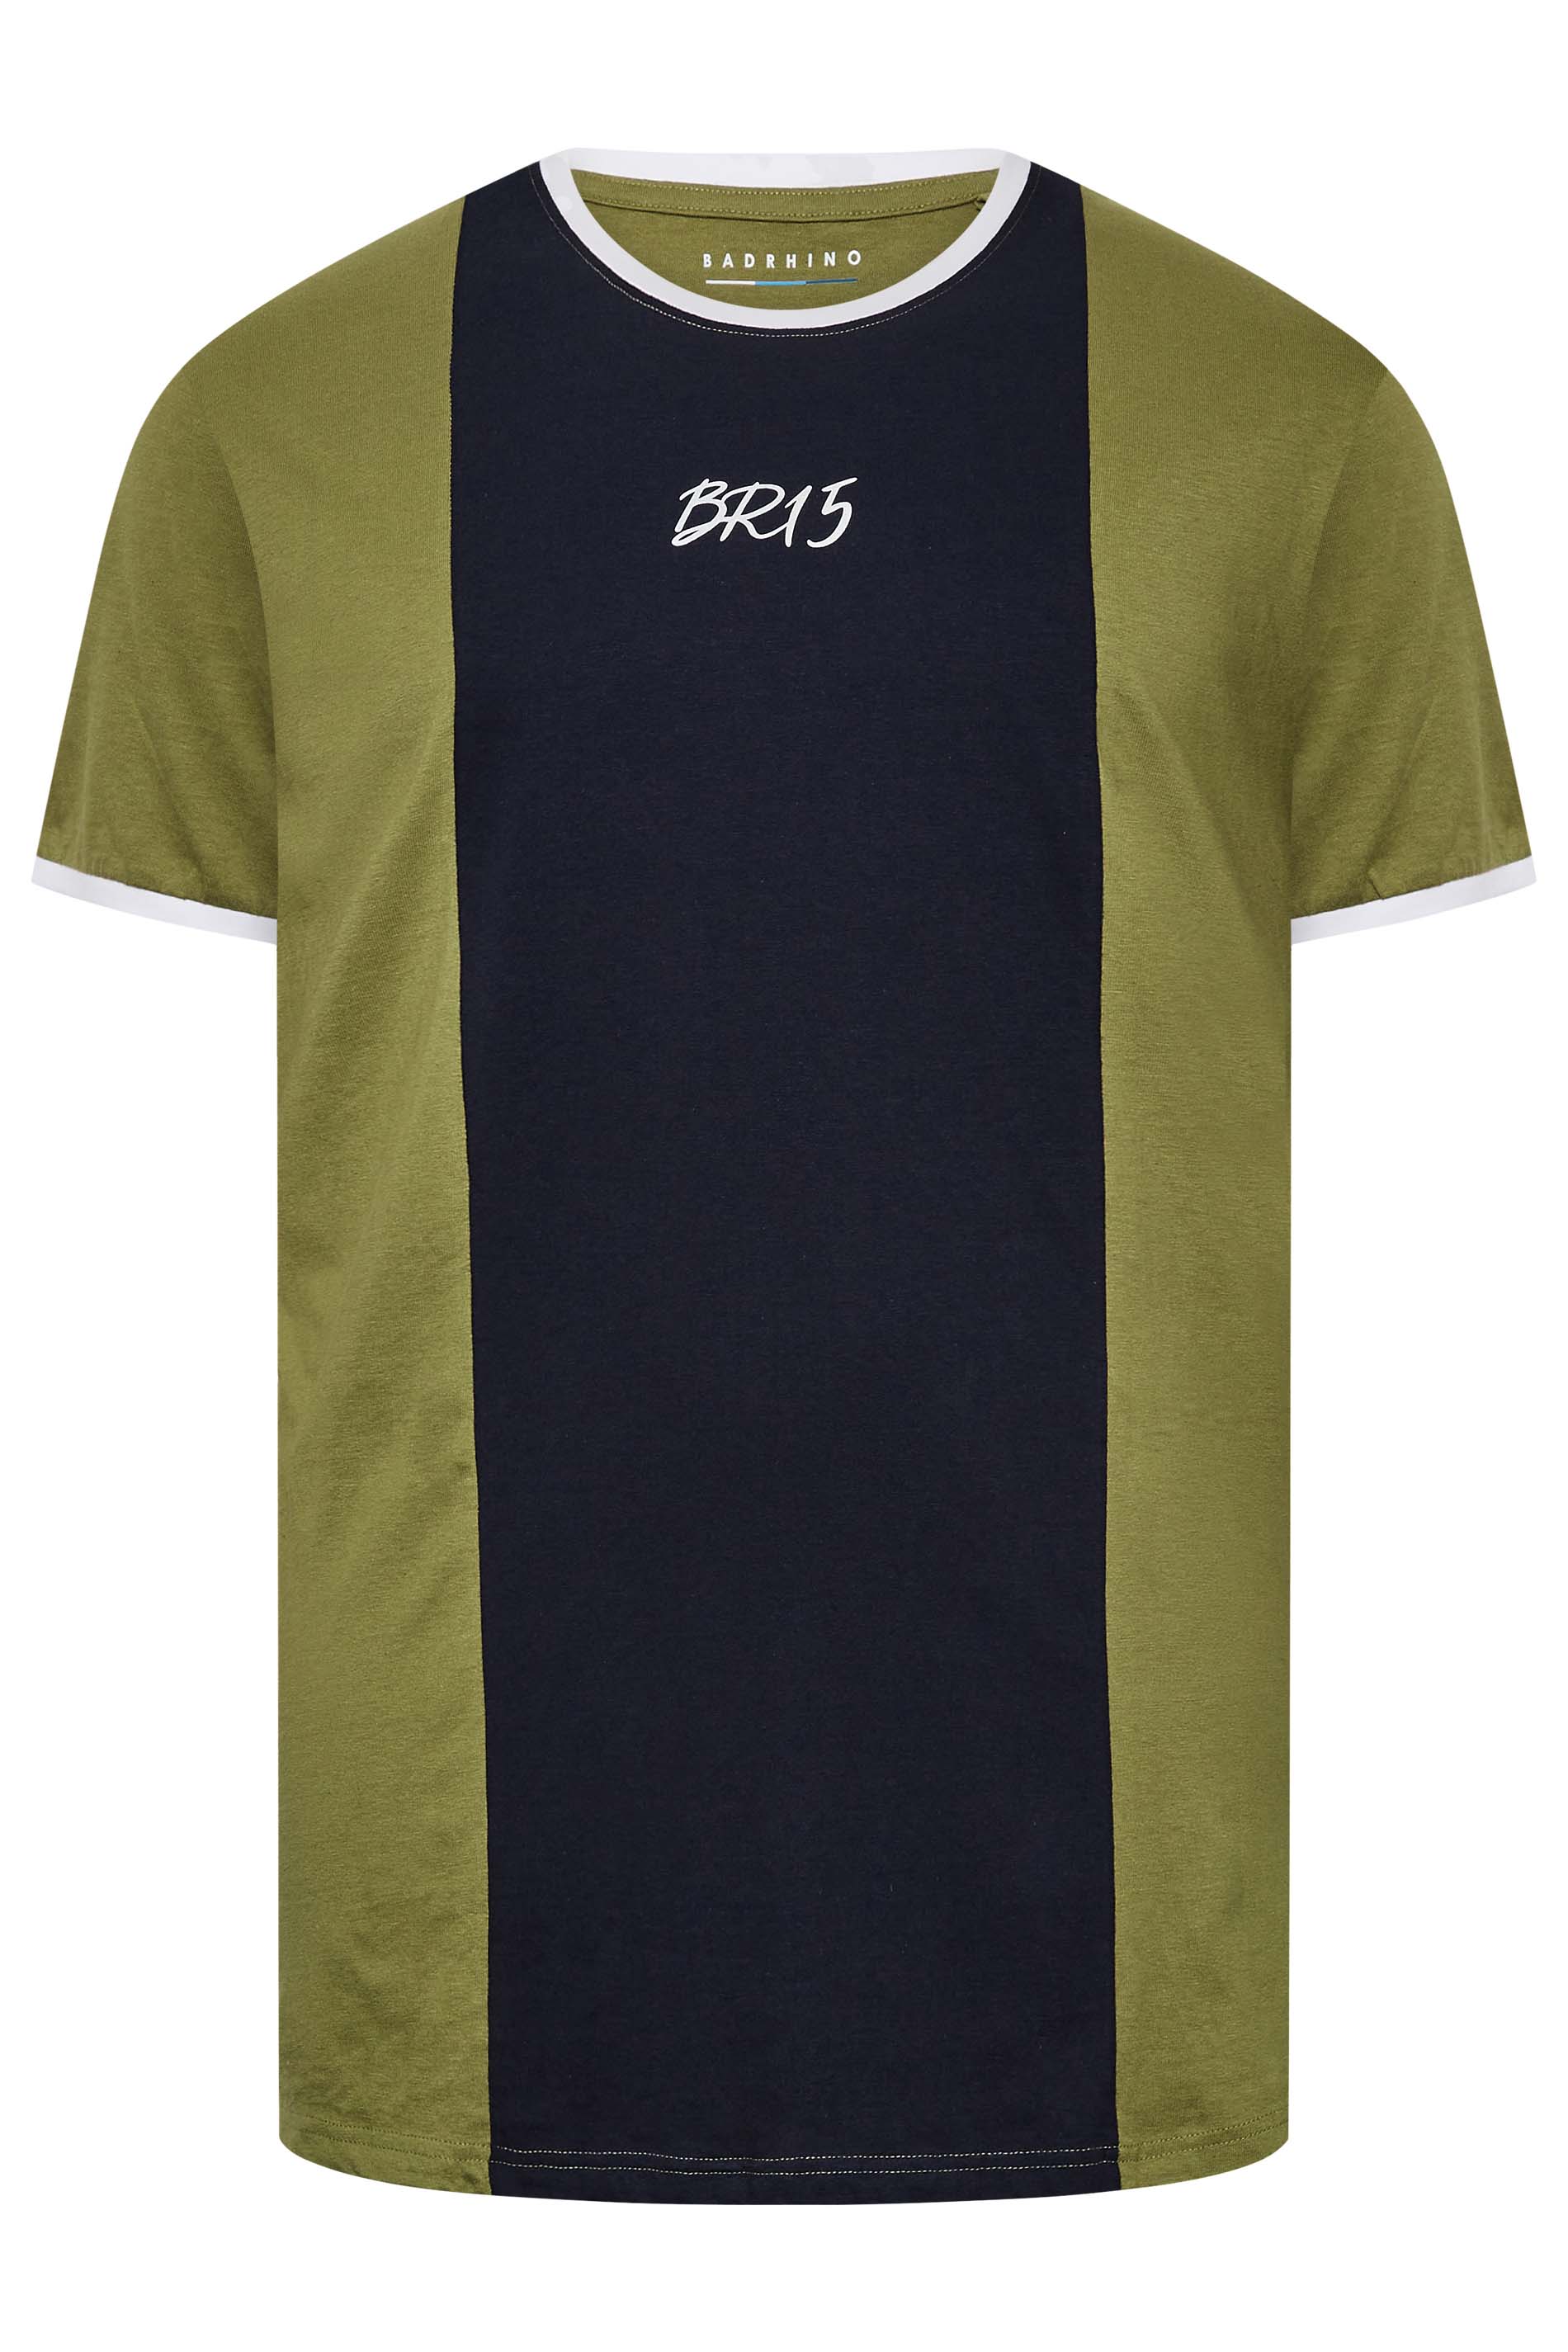 BadRhino Big & Tall Khaki Green Colour Block T-Shirt | BadRhino 3